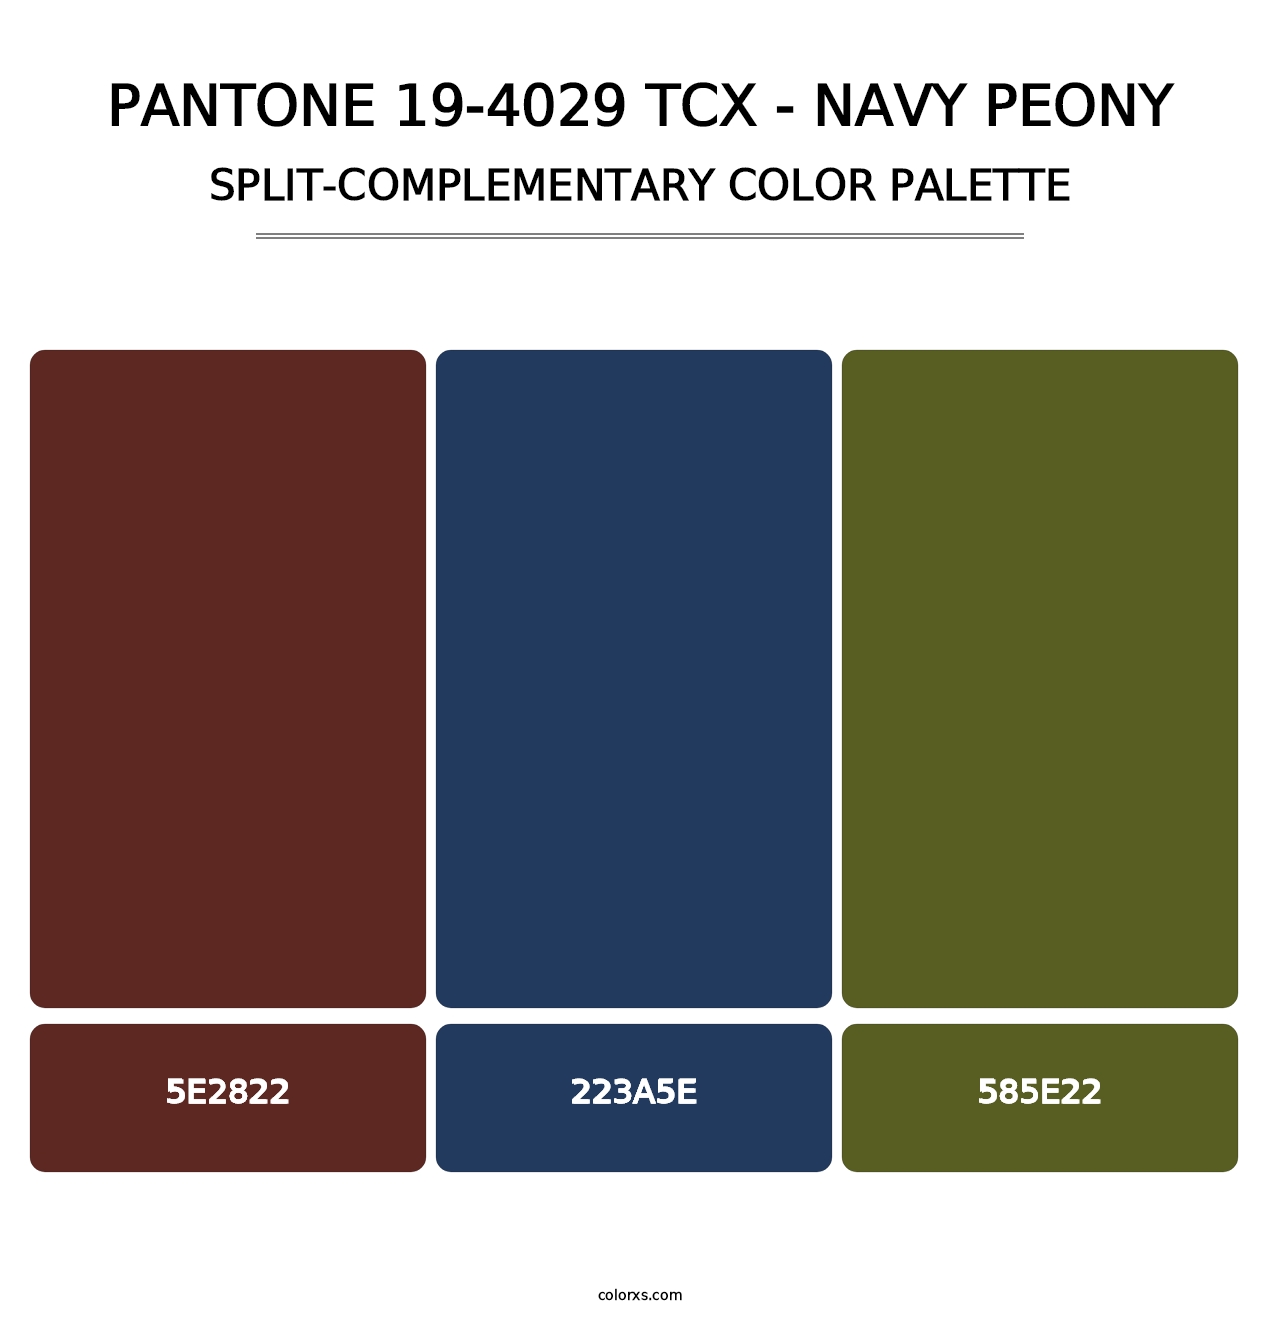 PANTONE 19-4029 TCX - Navy Peony - Split-Complementary Color Palette